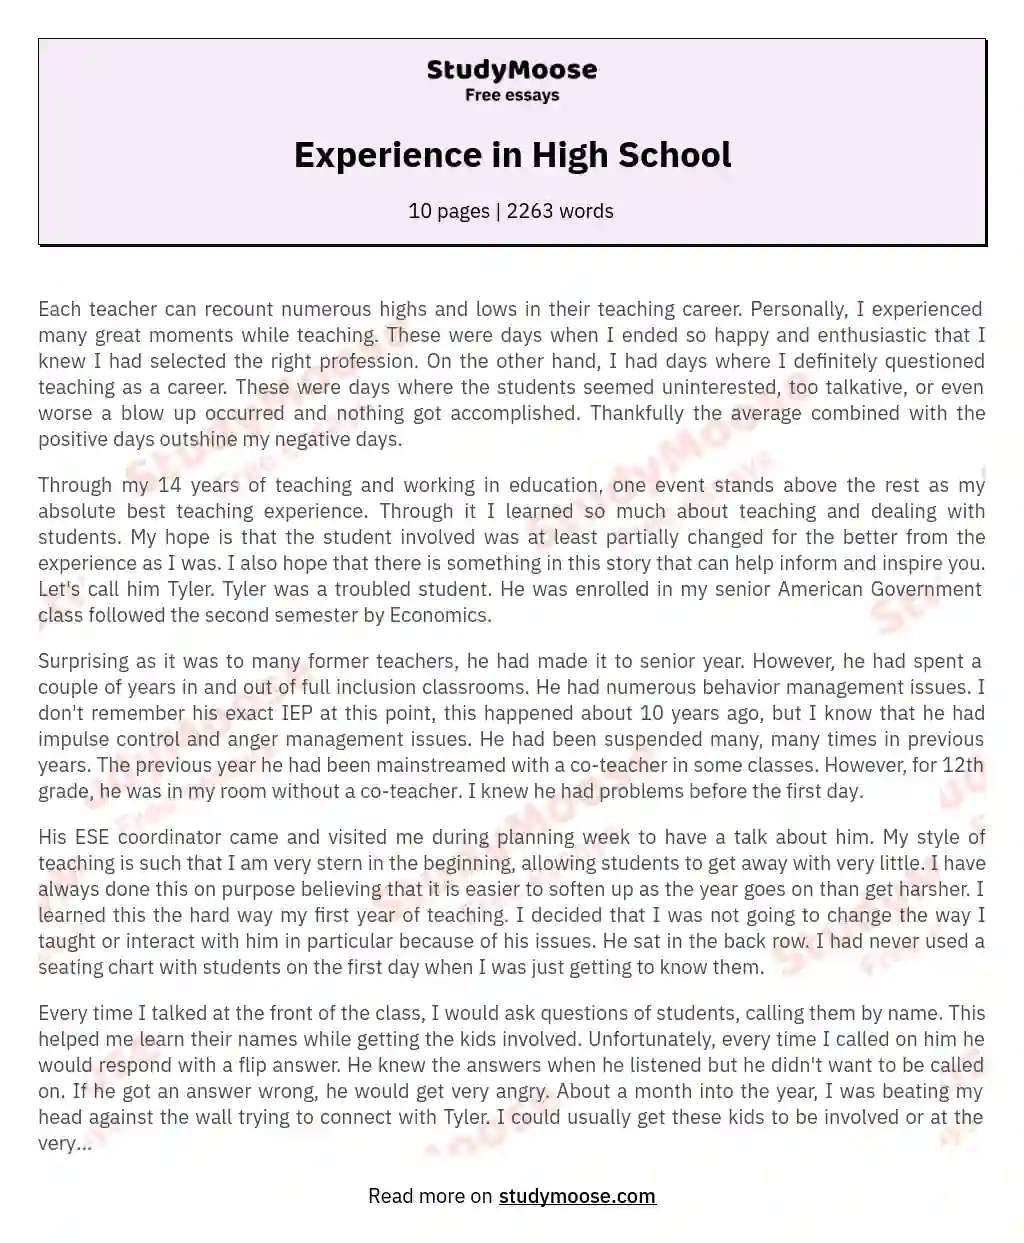 Experience in High School essay